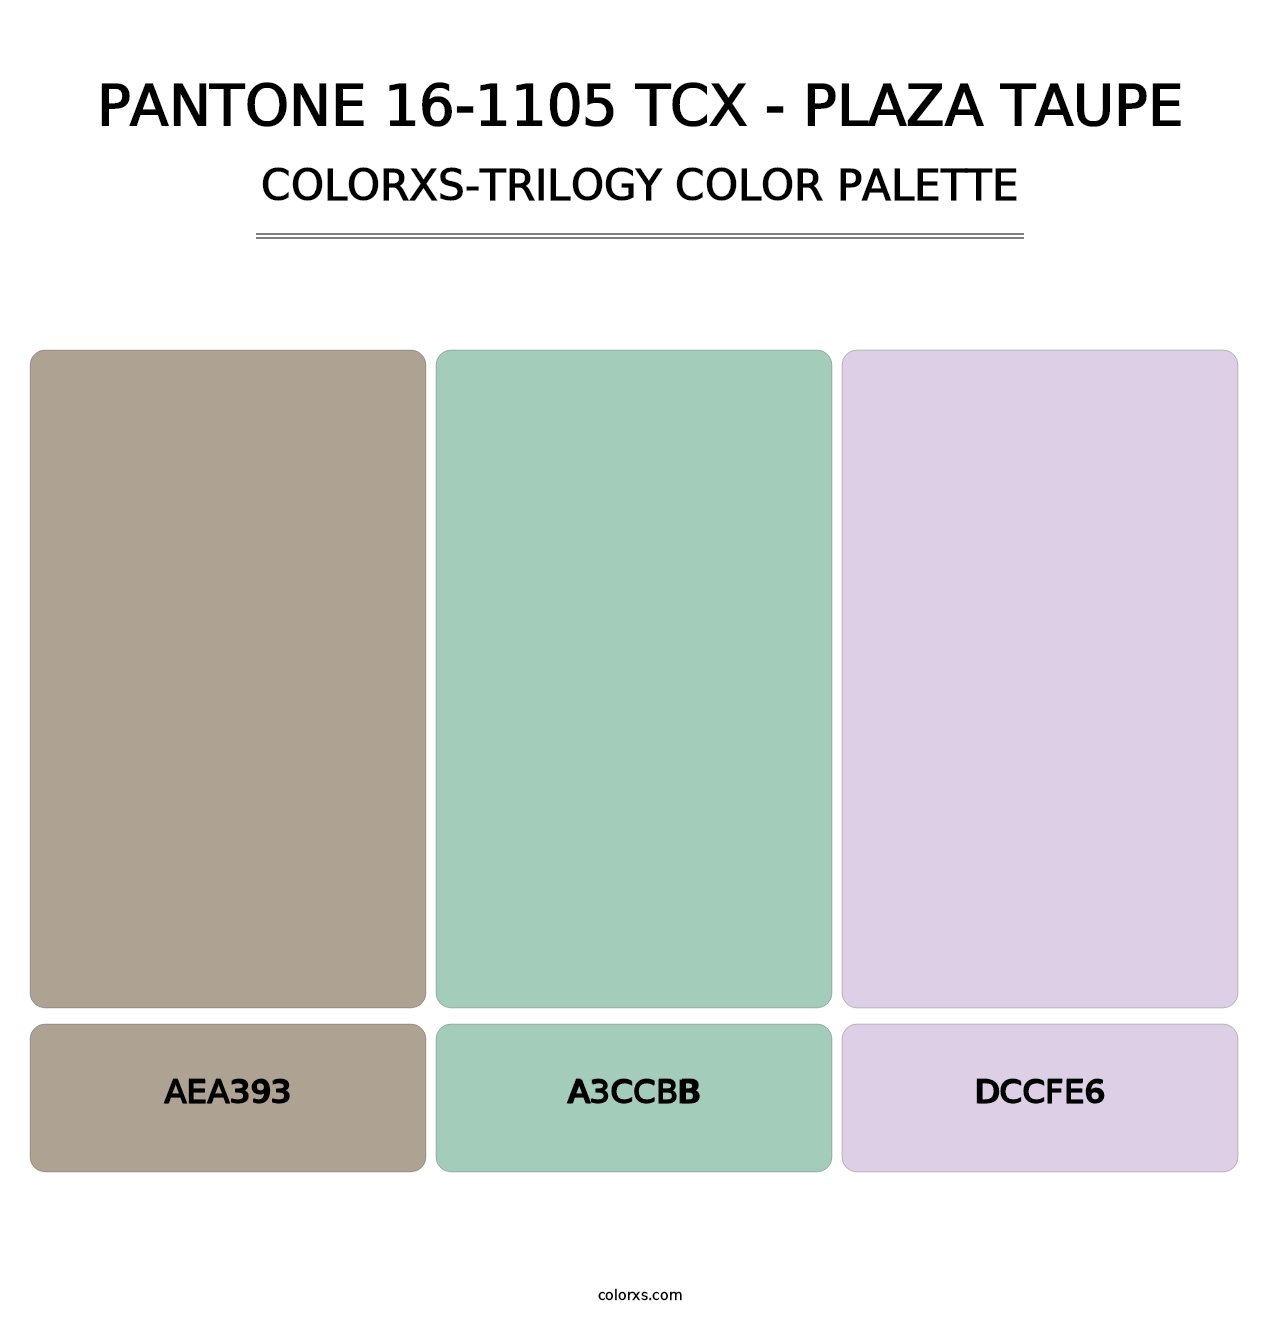 PANTONE 16-1105 TCX - Plaza Taupe - Colorxs Trilogy Palette